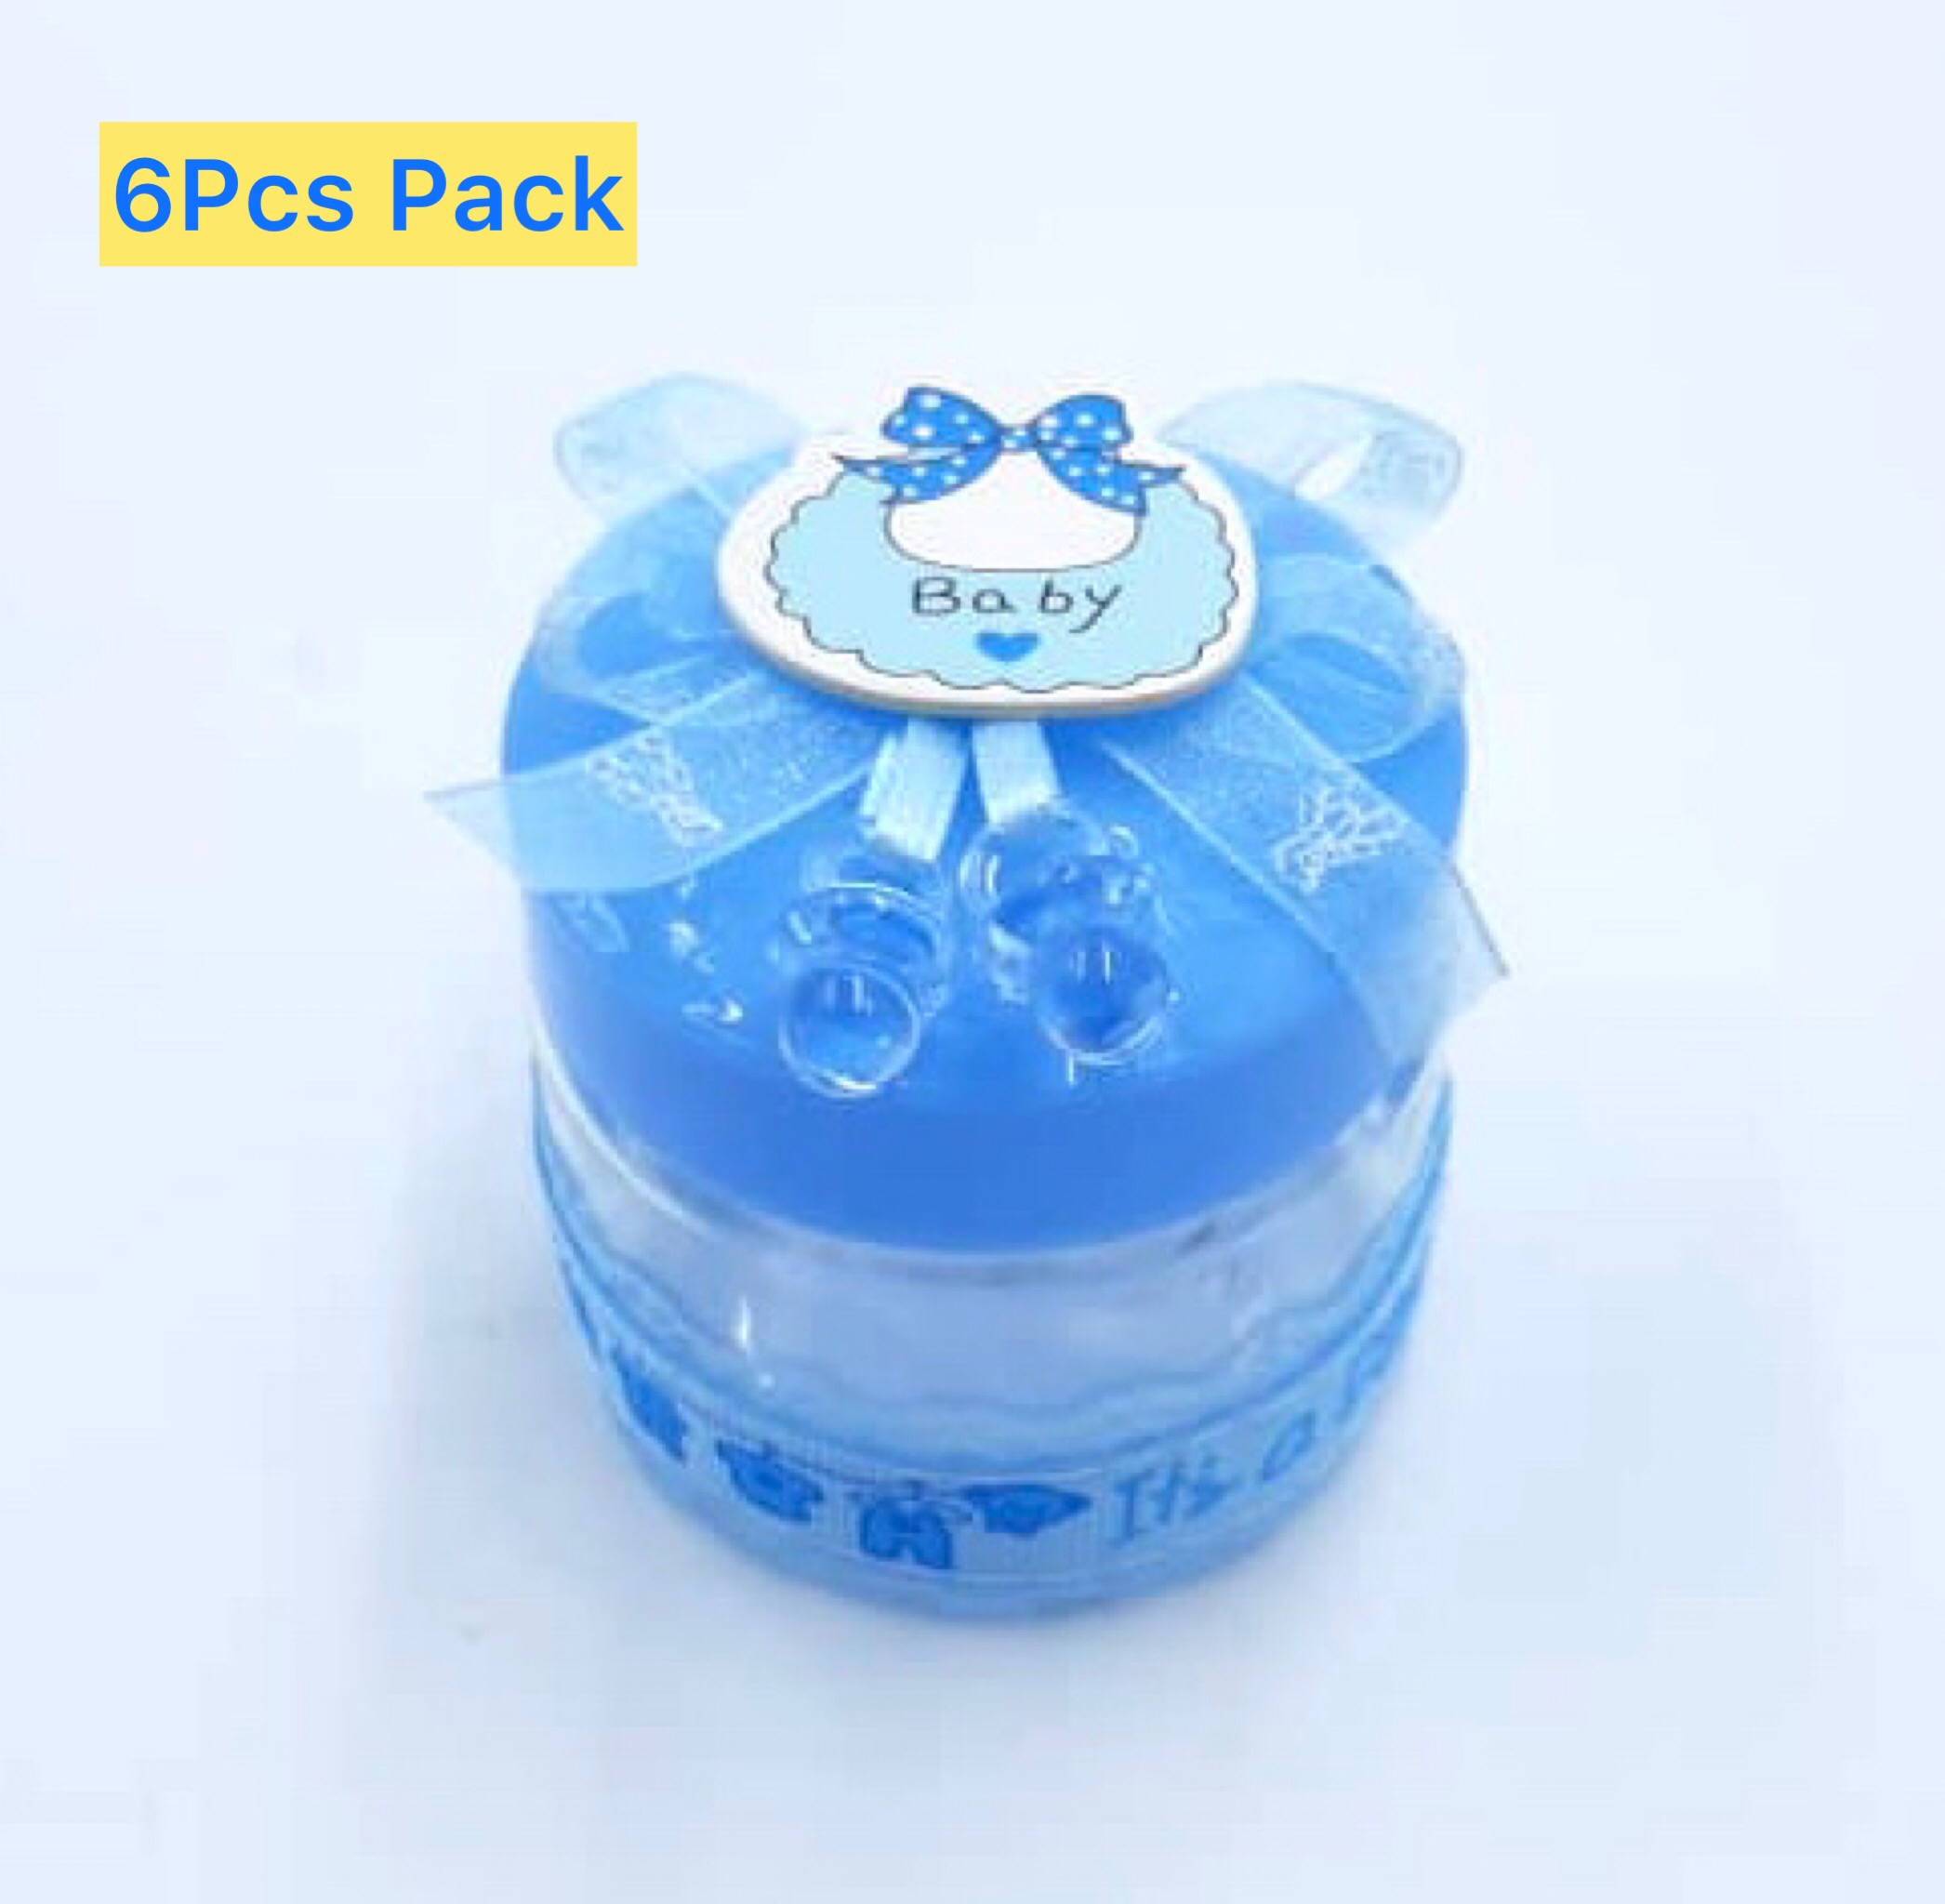 6Pcs Baby Storage Jar Birthday for Boy